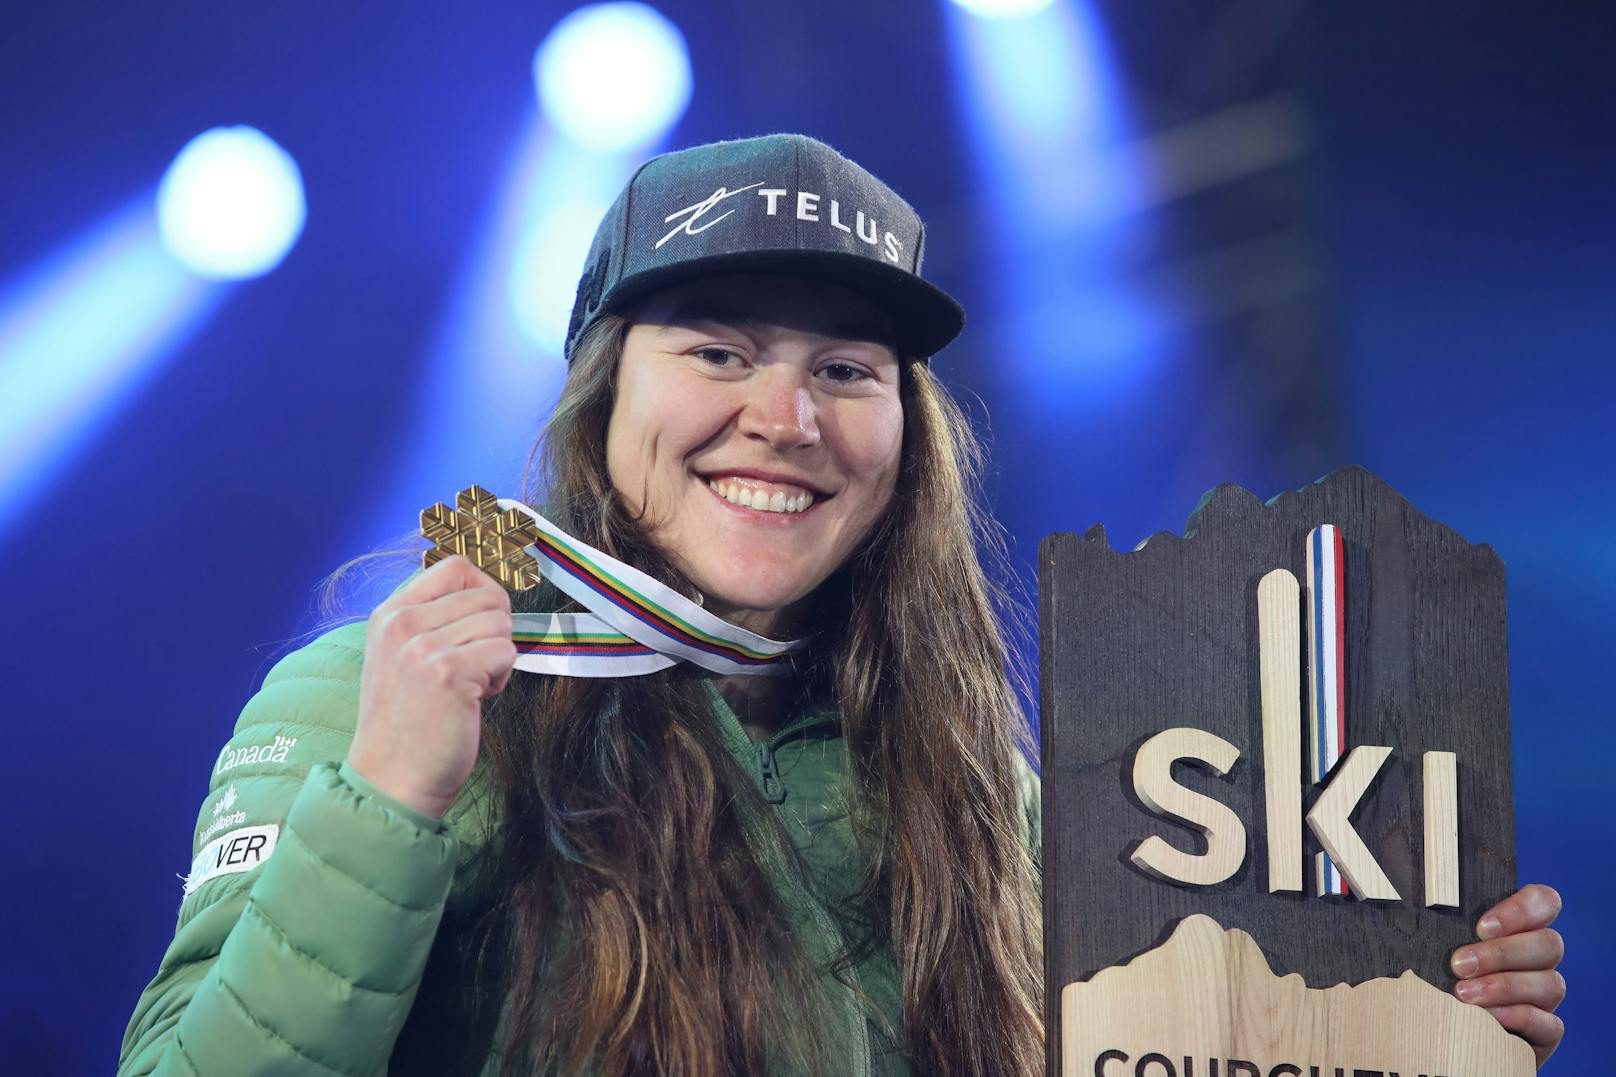 Überraschung beim Damen-Slalom! <strong>Laurence St-Germain</strong> holte Gold für Kanada. Top-Favoritin <strong>Mikaela Shiffrin</strong> musste sich mit Platz zwei begnügen. <strong>Lena Dürr</strong> wurde Dritte, die ÖSV-Damen gingen leer aus.